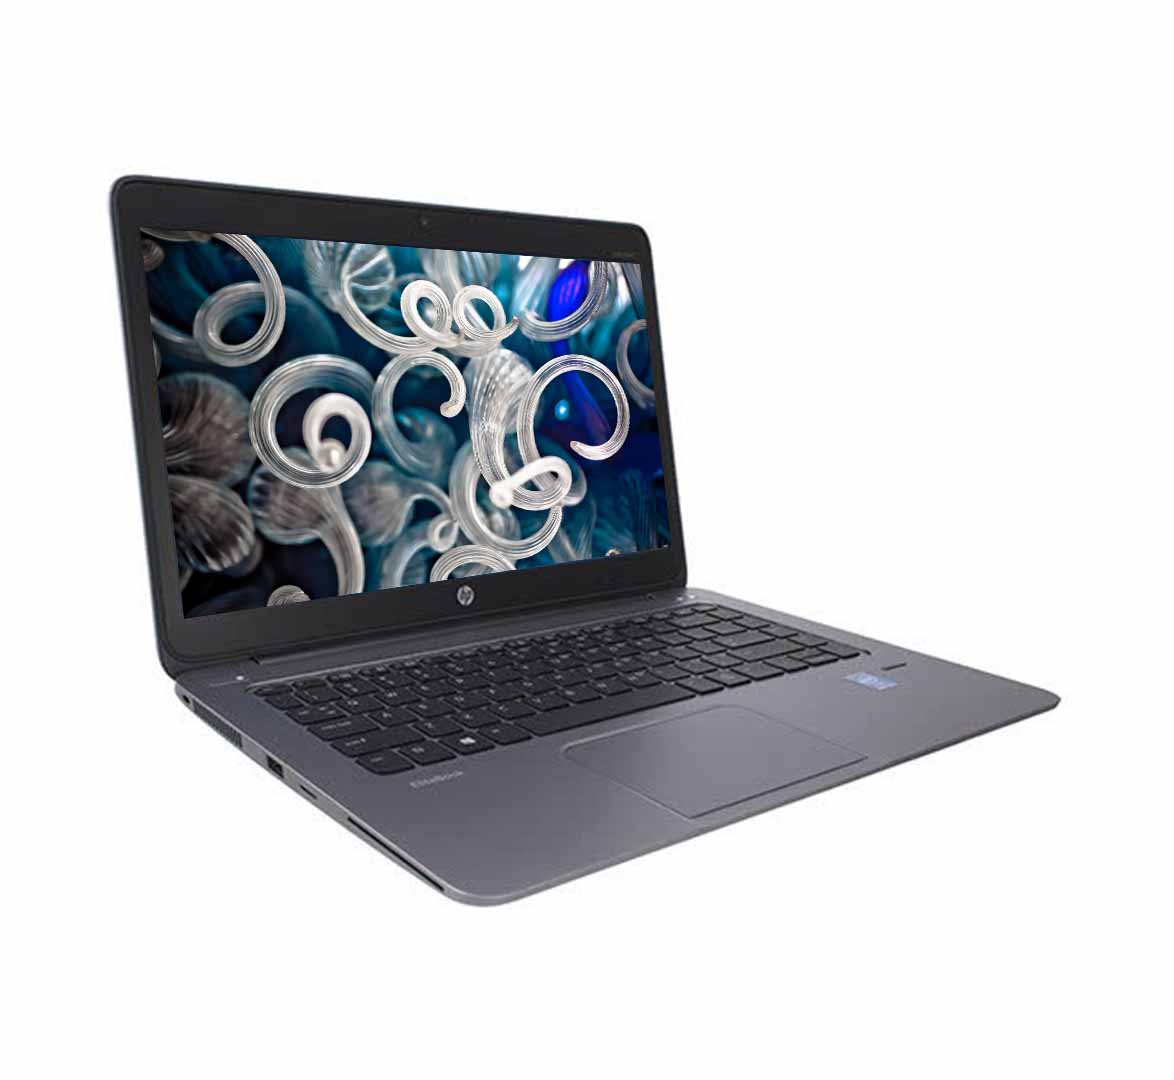 HP EliteBook Folio 1040 G1 Business Laptop, Intel Core i5-4th Gen CPU, 8GB RAM, 256GB SSD, 14 inch Display, Windows 10 Pro